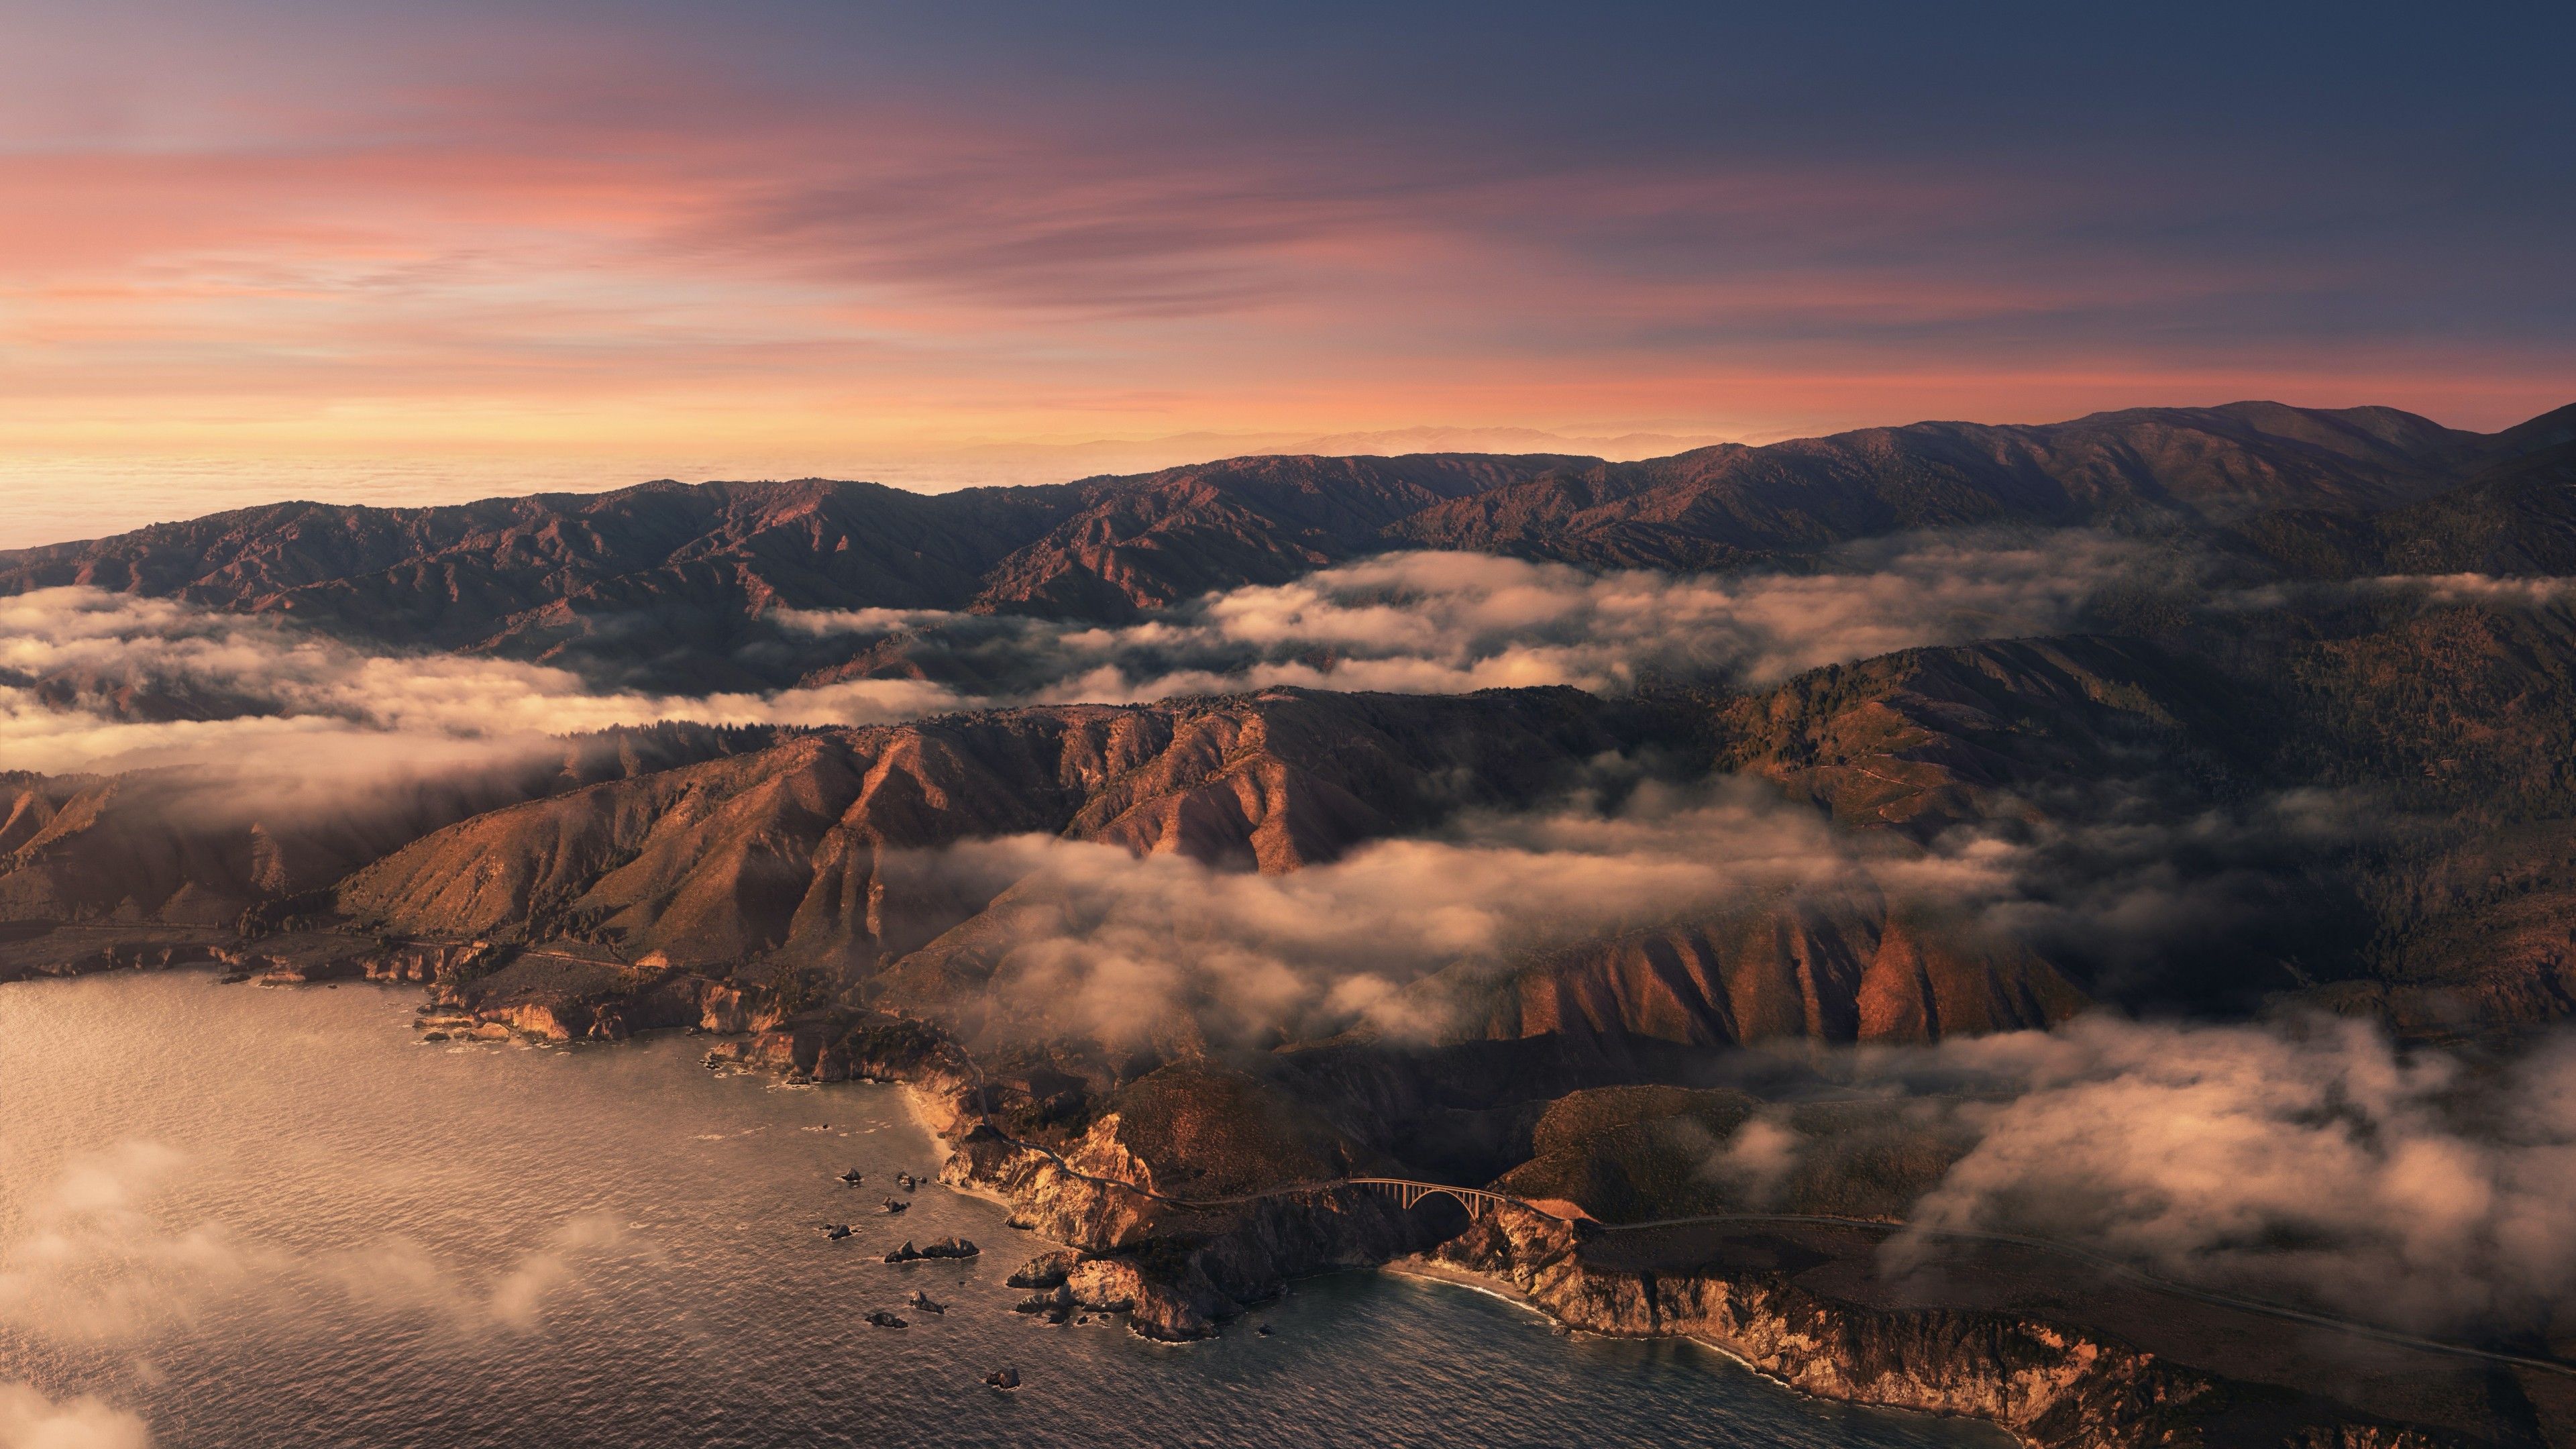 Big Sur 4K Wallpaper, Mountains, Clouds, Sunset, Evening, macOS, Stock, California, Aesthetic, Nature